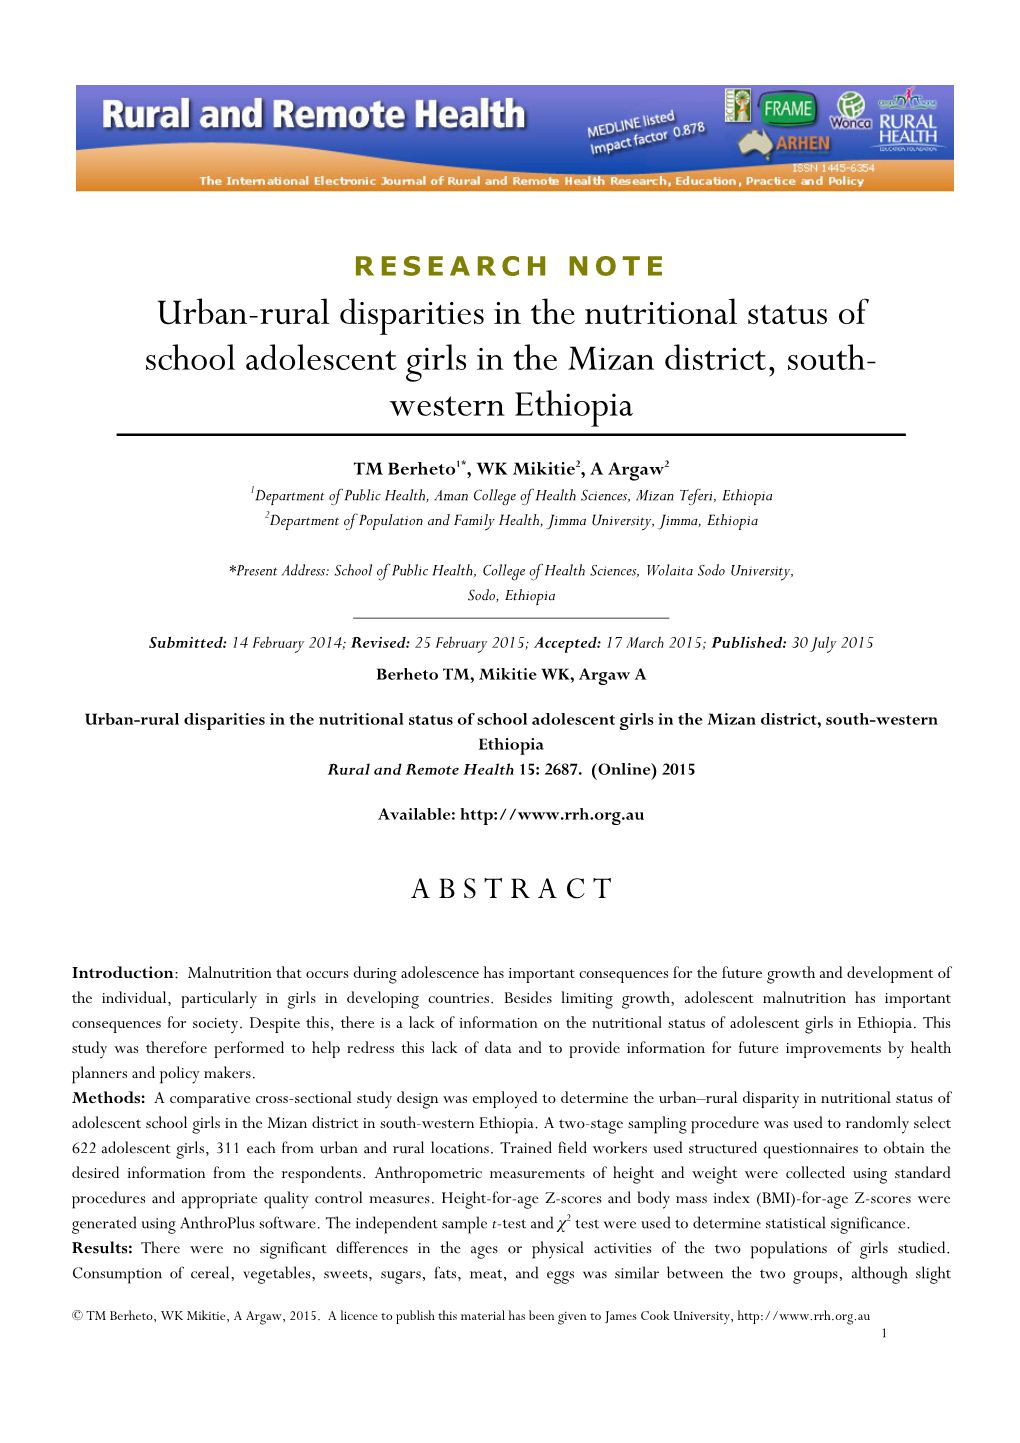 Urban-Rural Disparities in the Nutritional Status of School Adolescent Girls in the Mizan District, South- Western Ethiopia